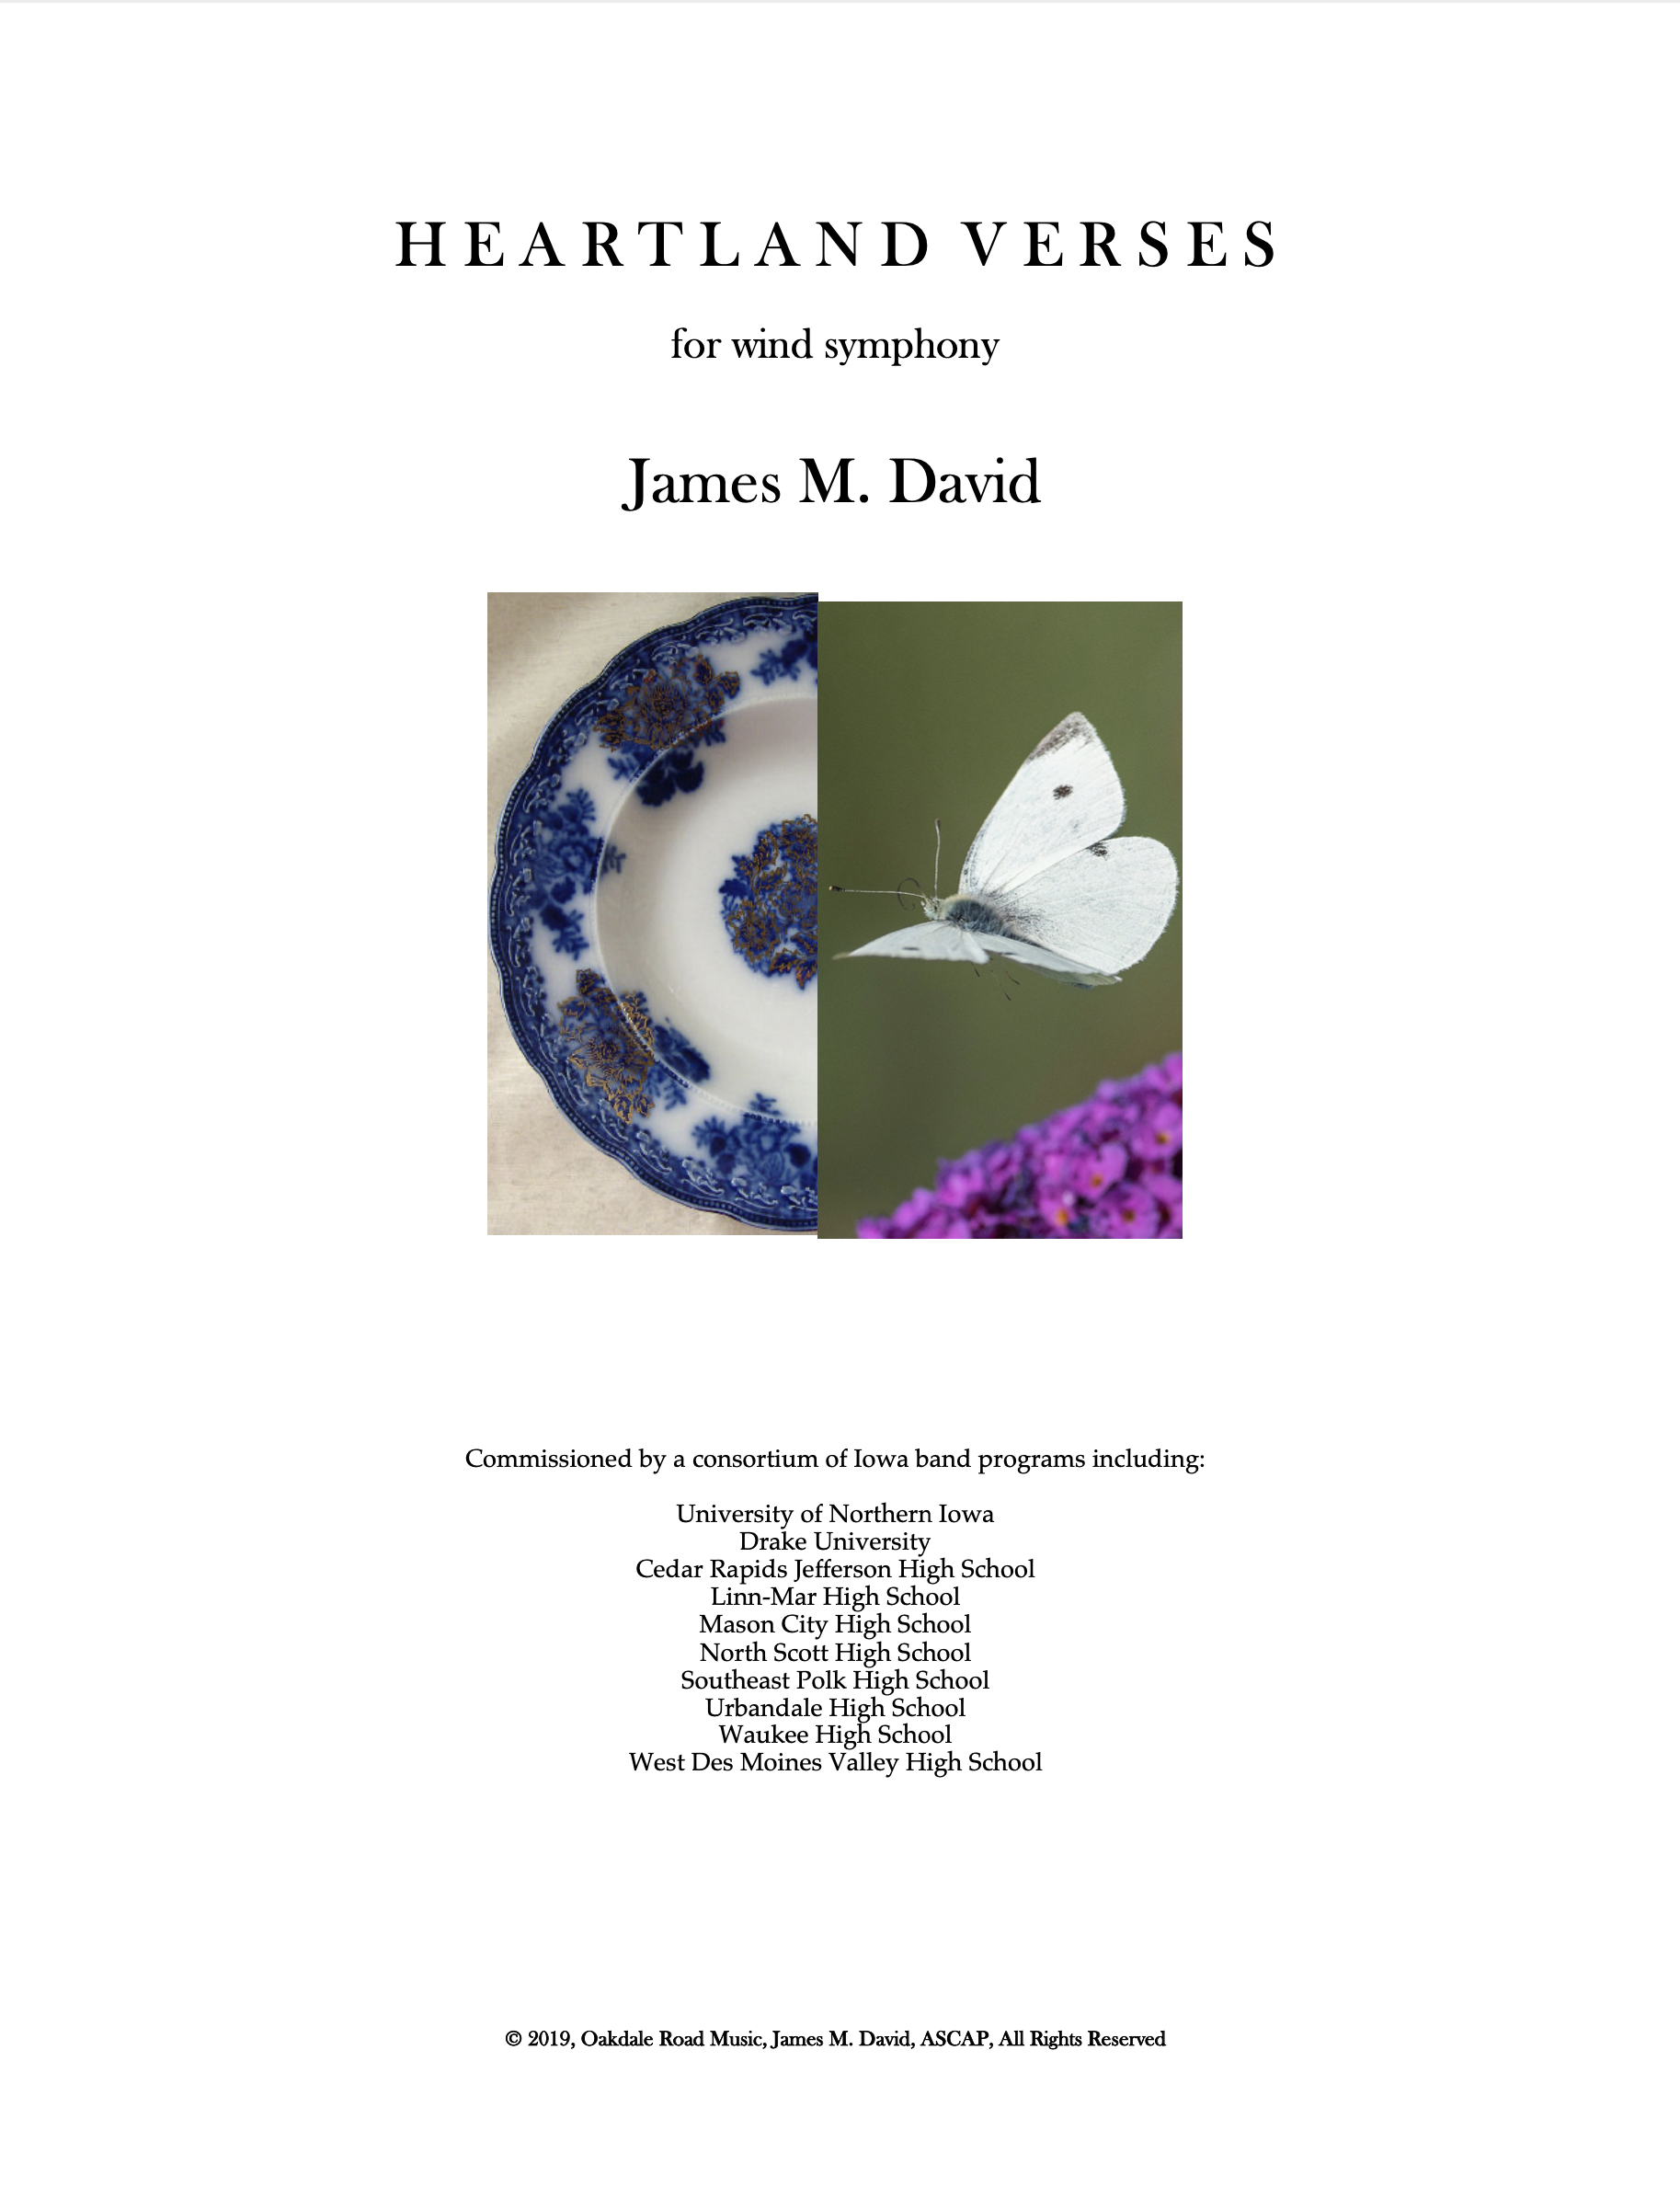 Heartland Verses by James David